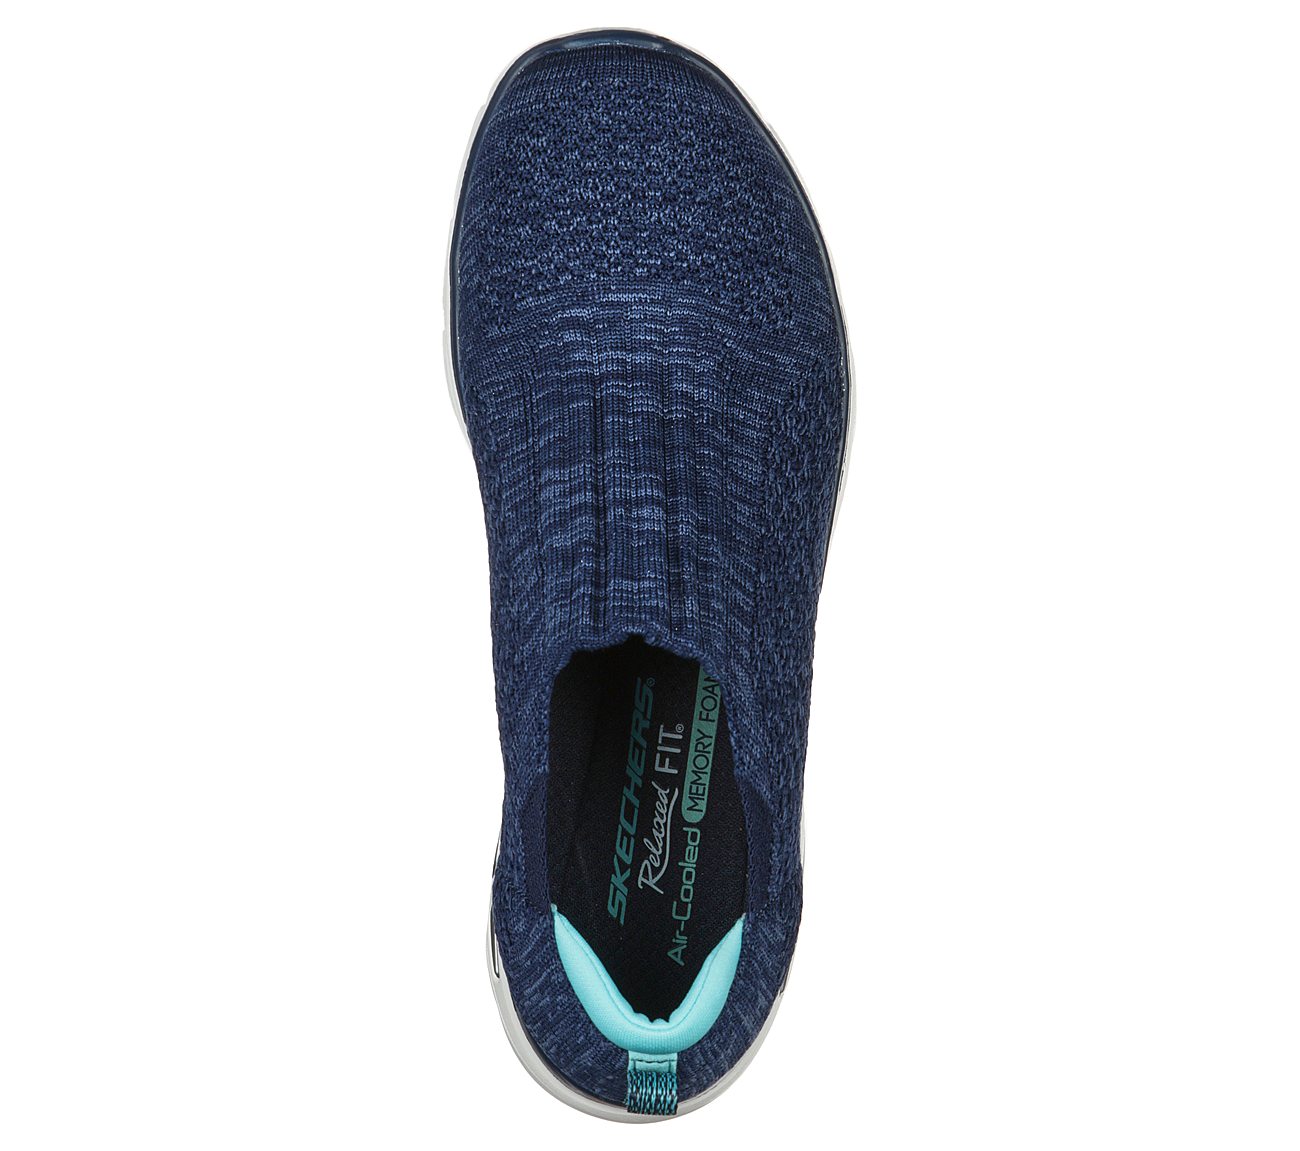 EMPIRE D'LUX-SWEET PEARL, NAVY/LIGHT BLUE Footwear Top View